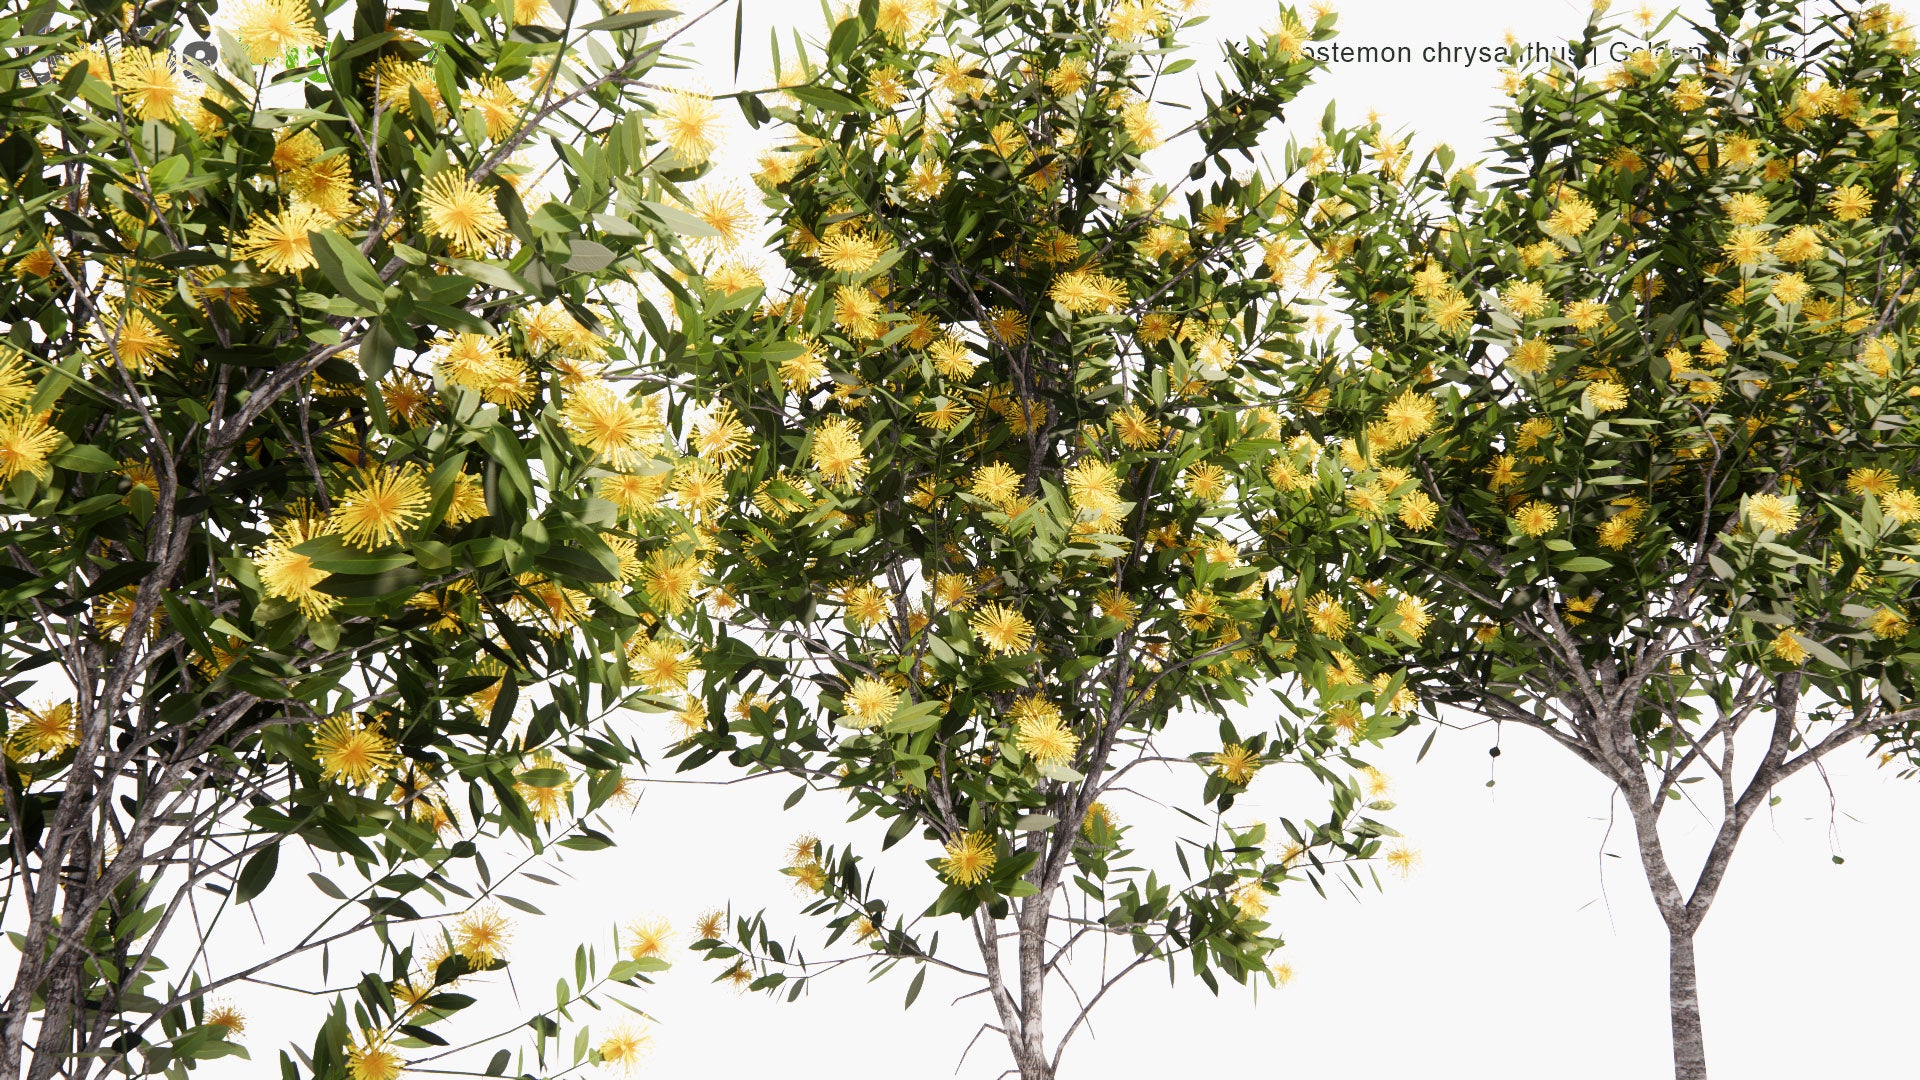 Low Poly Xanthostemon Chrysanthus - Golden Penda (3D Model)